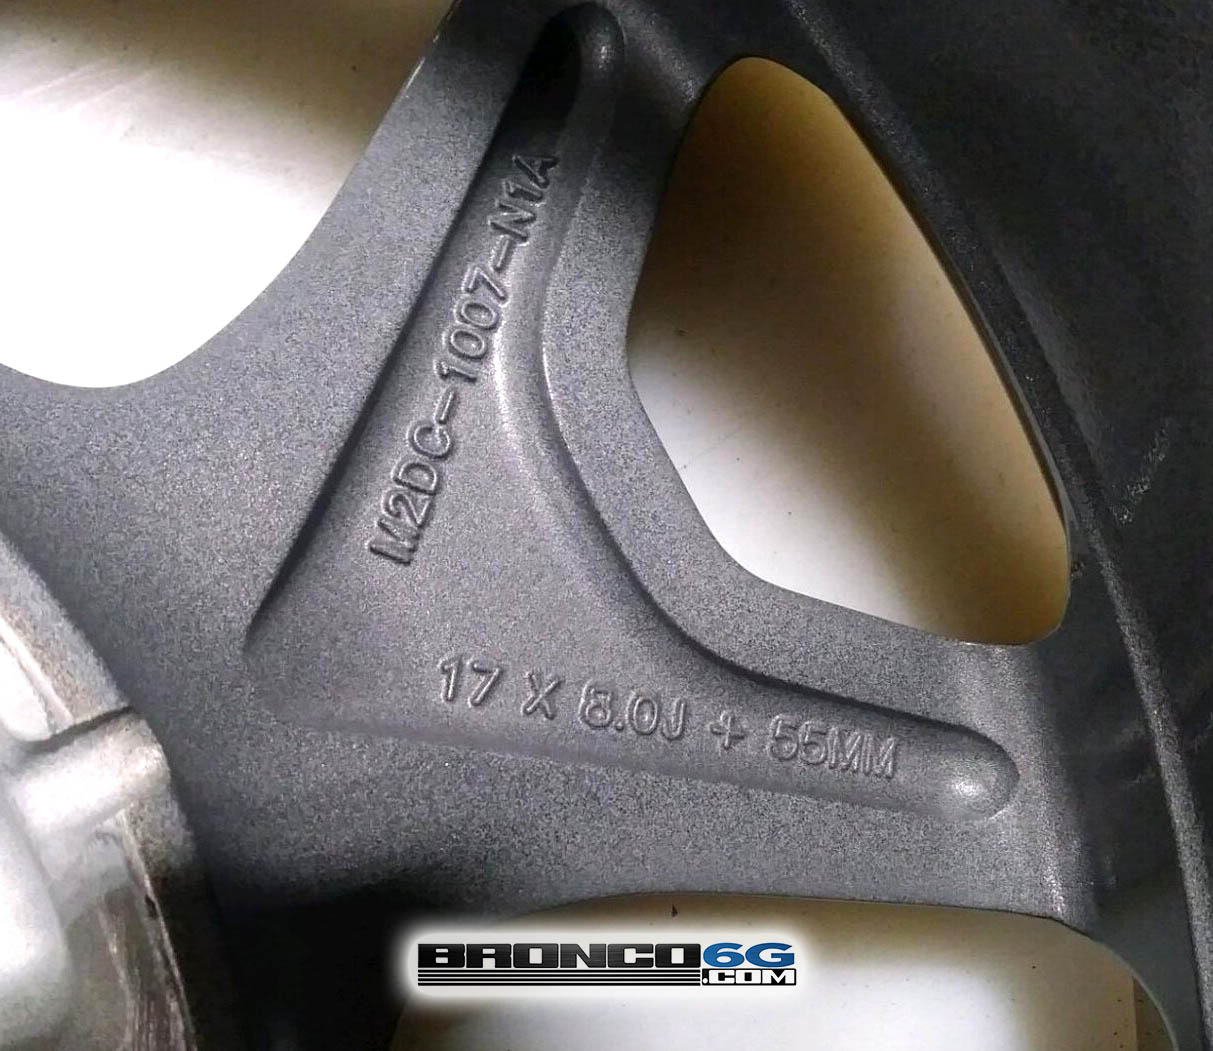 2021 Bronco - Factory Rims : Wheels Specs 6.jpg